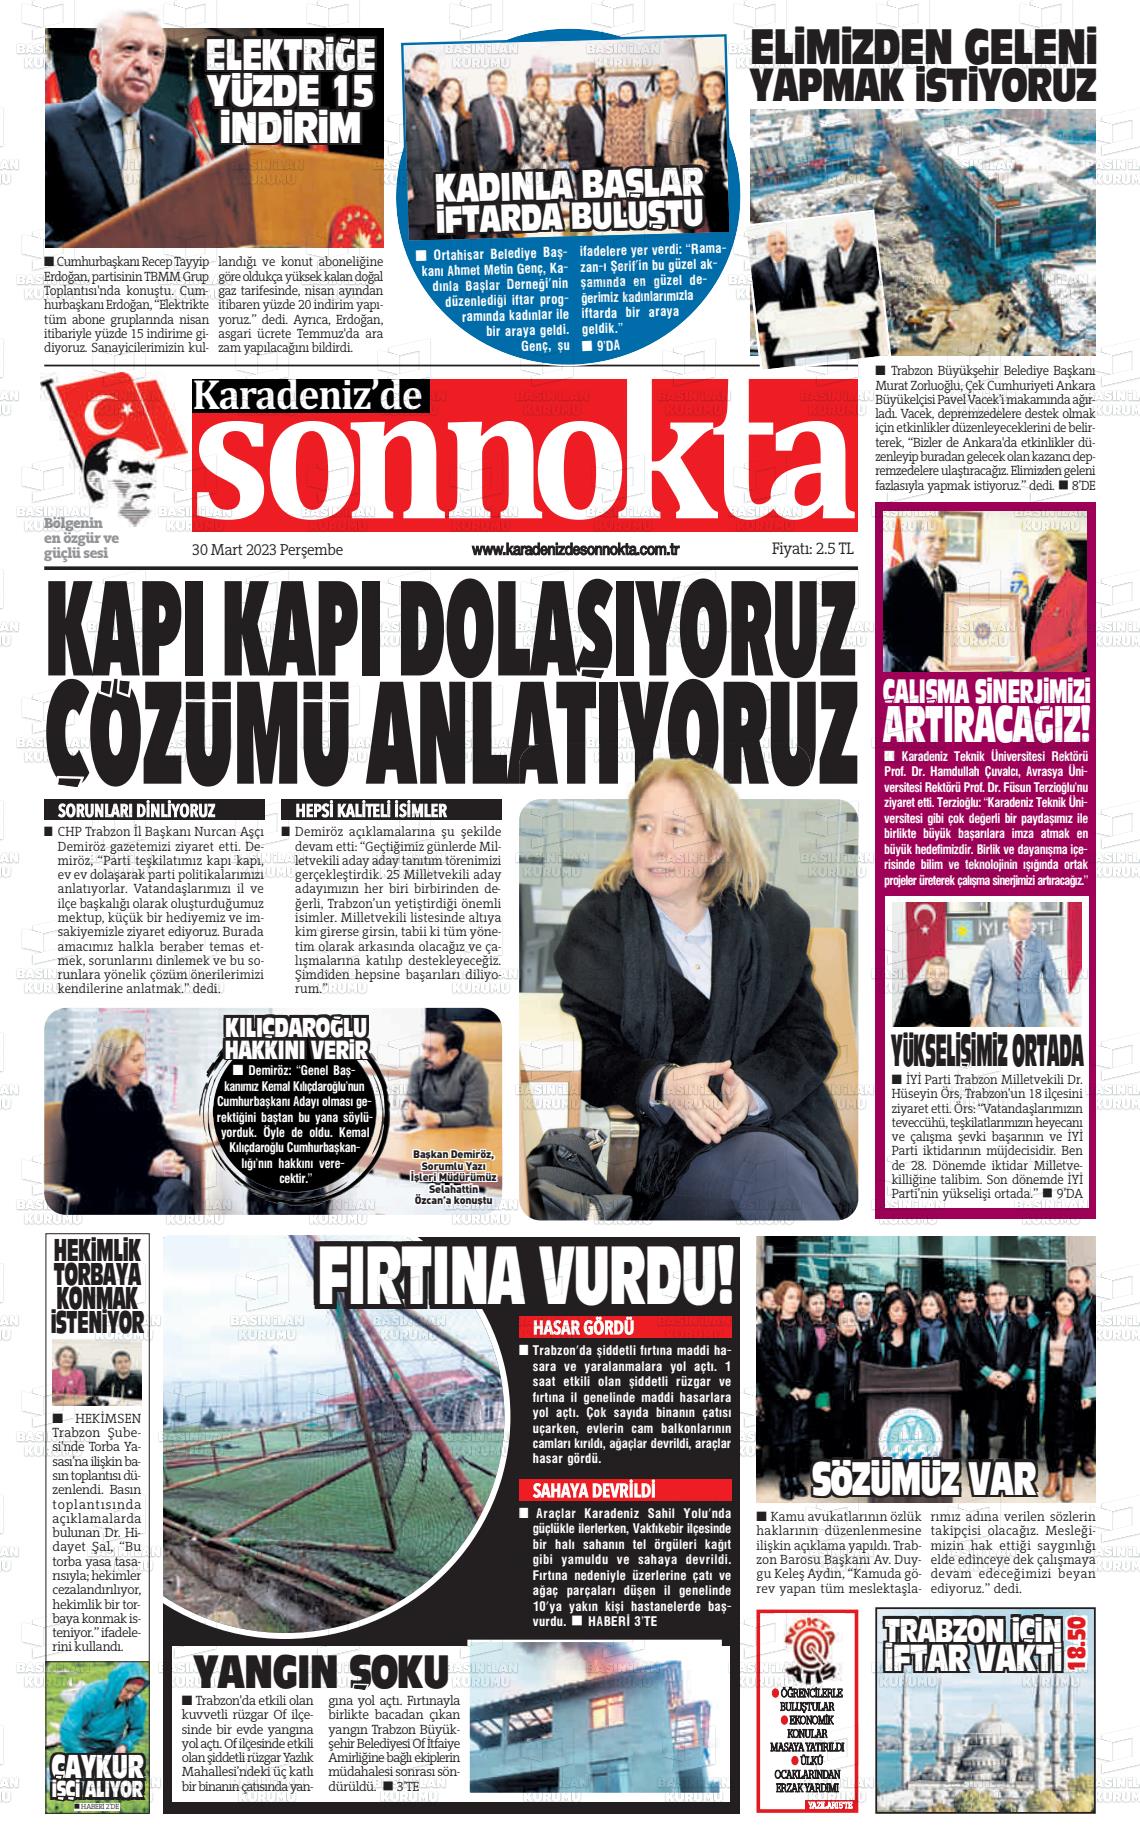 30 Mart 2023 Karadeniz'de Sonnokta Gazete Manşeti